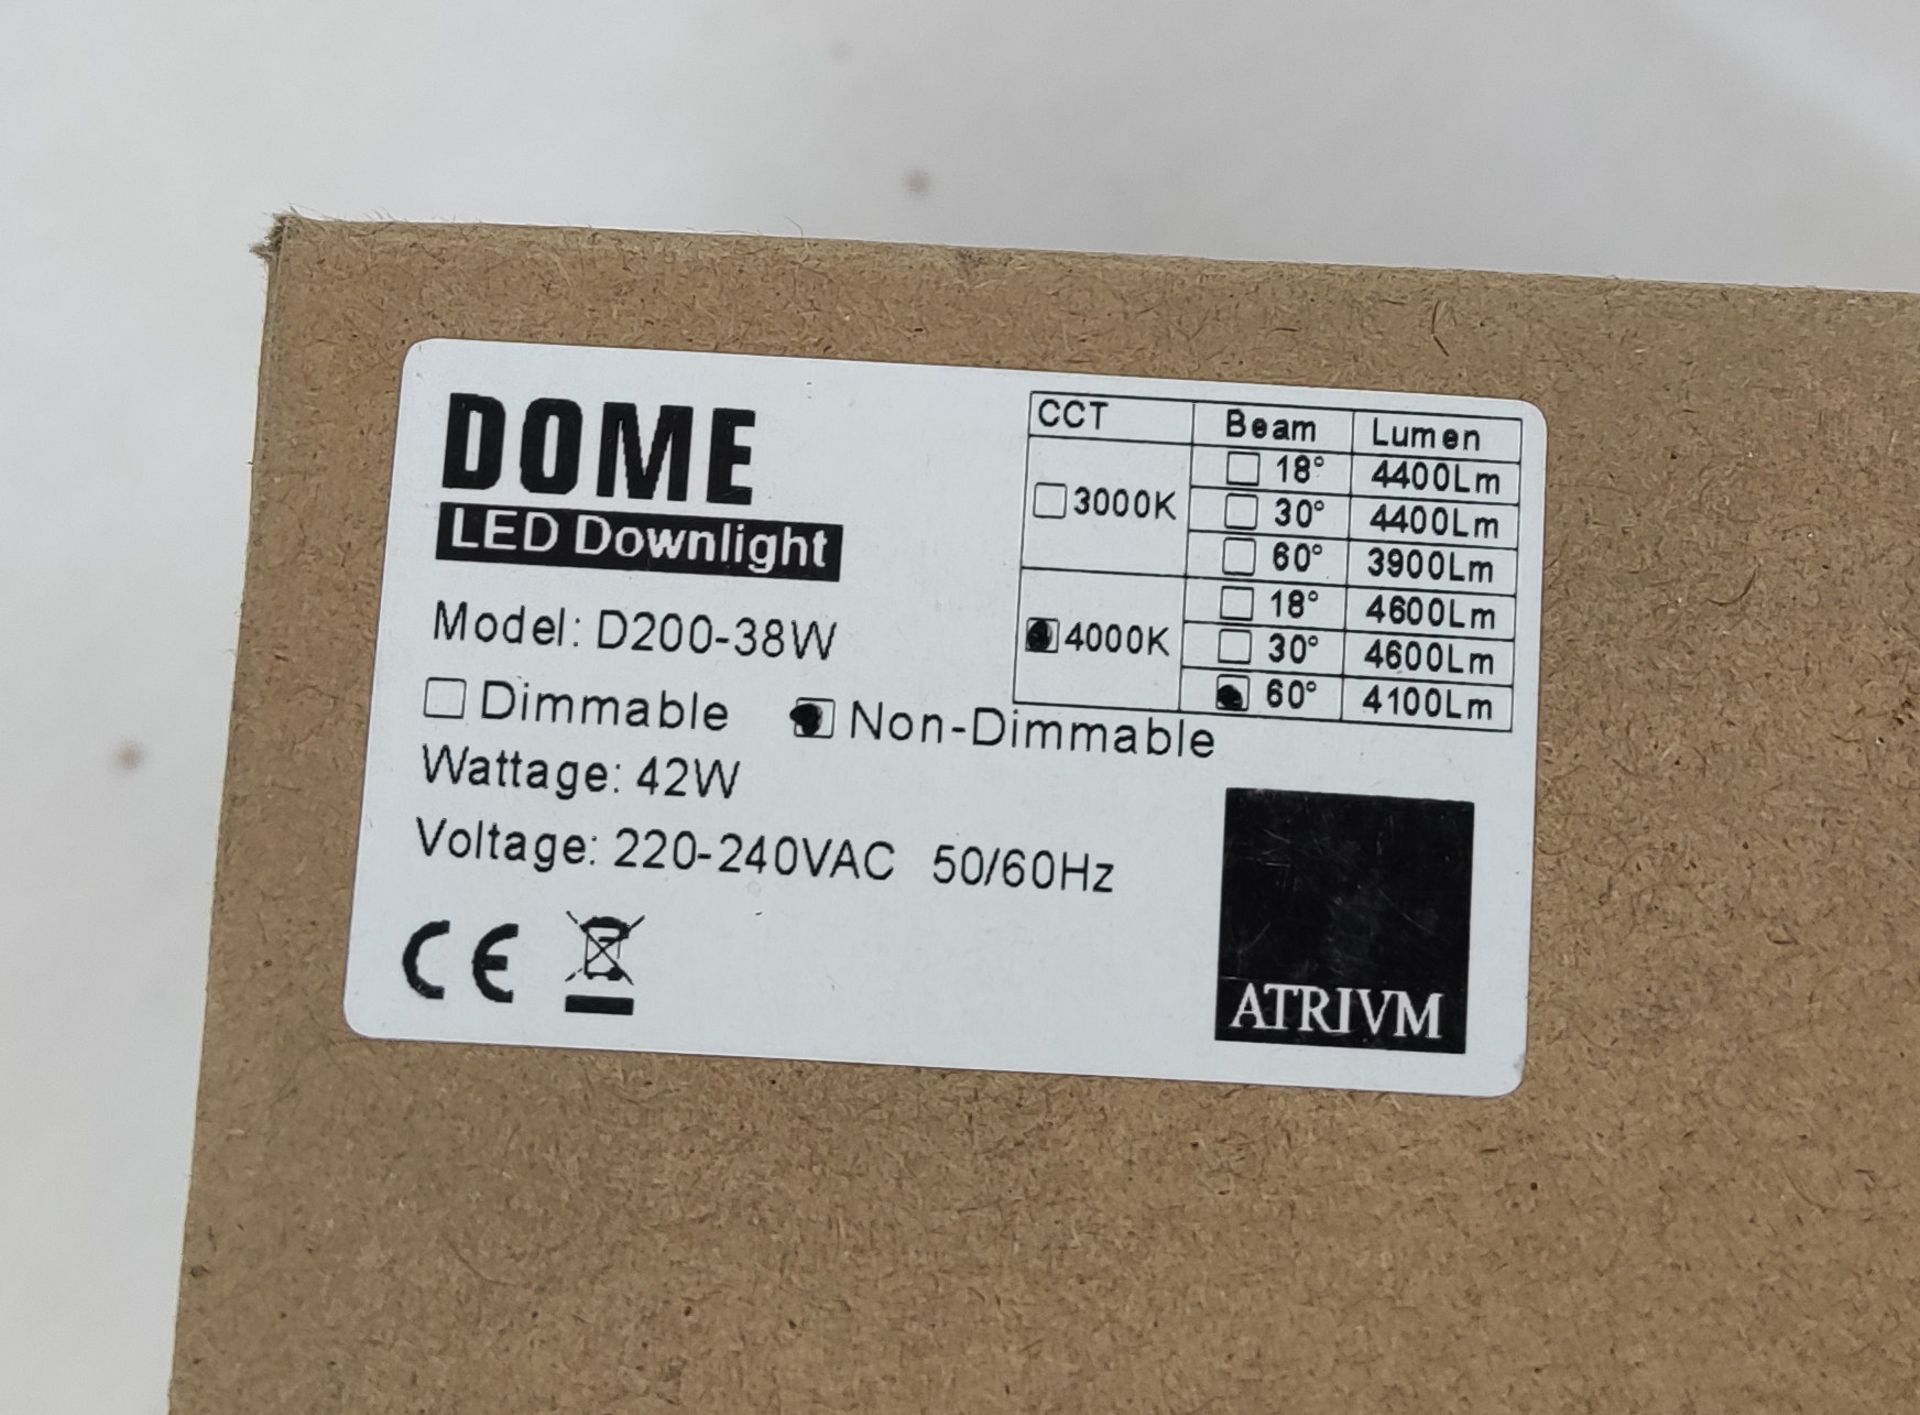 1 x ATRIUM Dome Led Downlight D200-38W Non-Dimmable 4000K 60Deg 4100Lm 42W 220-240V - Diameter 21. - Image 6 of 7